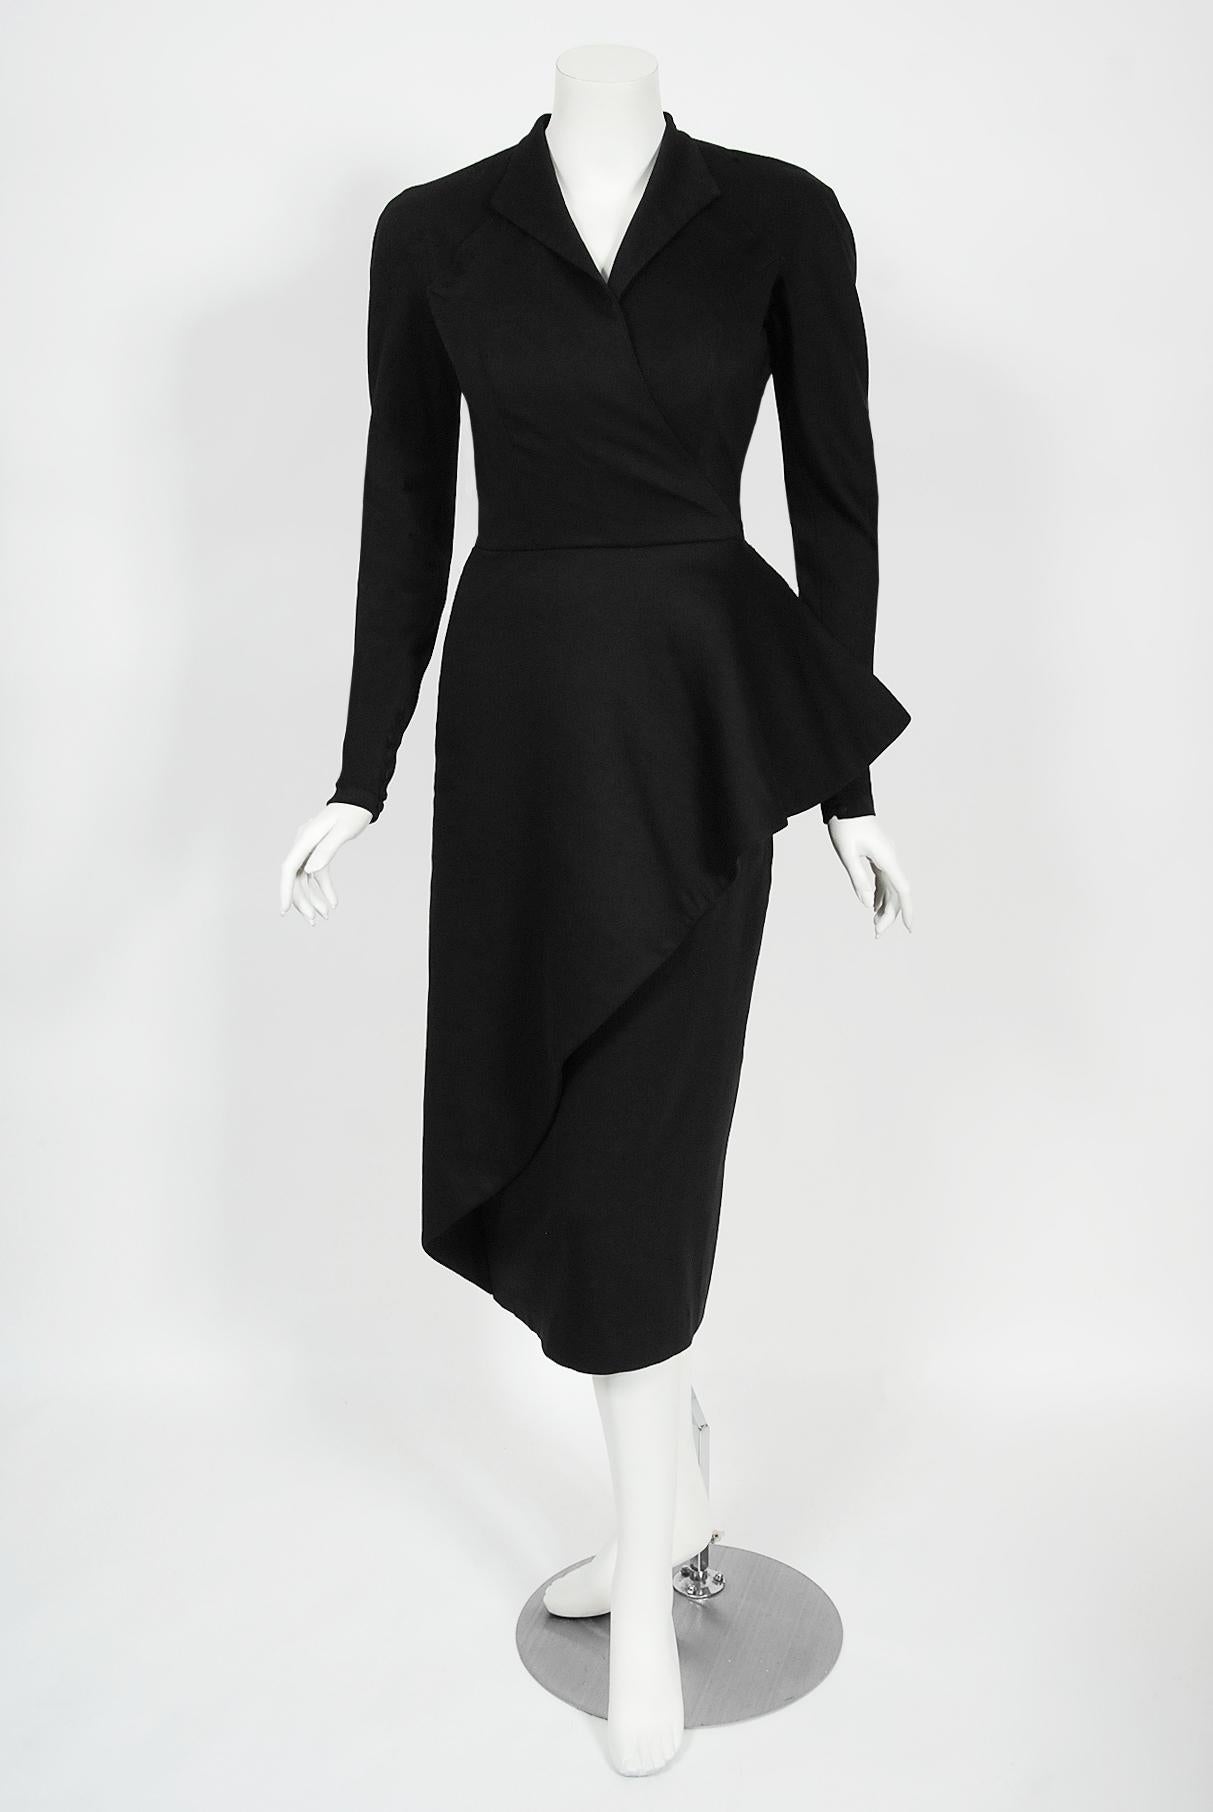 Vintage 1949 Lanvin Haute Couture Documented Sculpted Black Wool Cocktail Dress 8